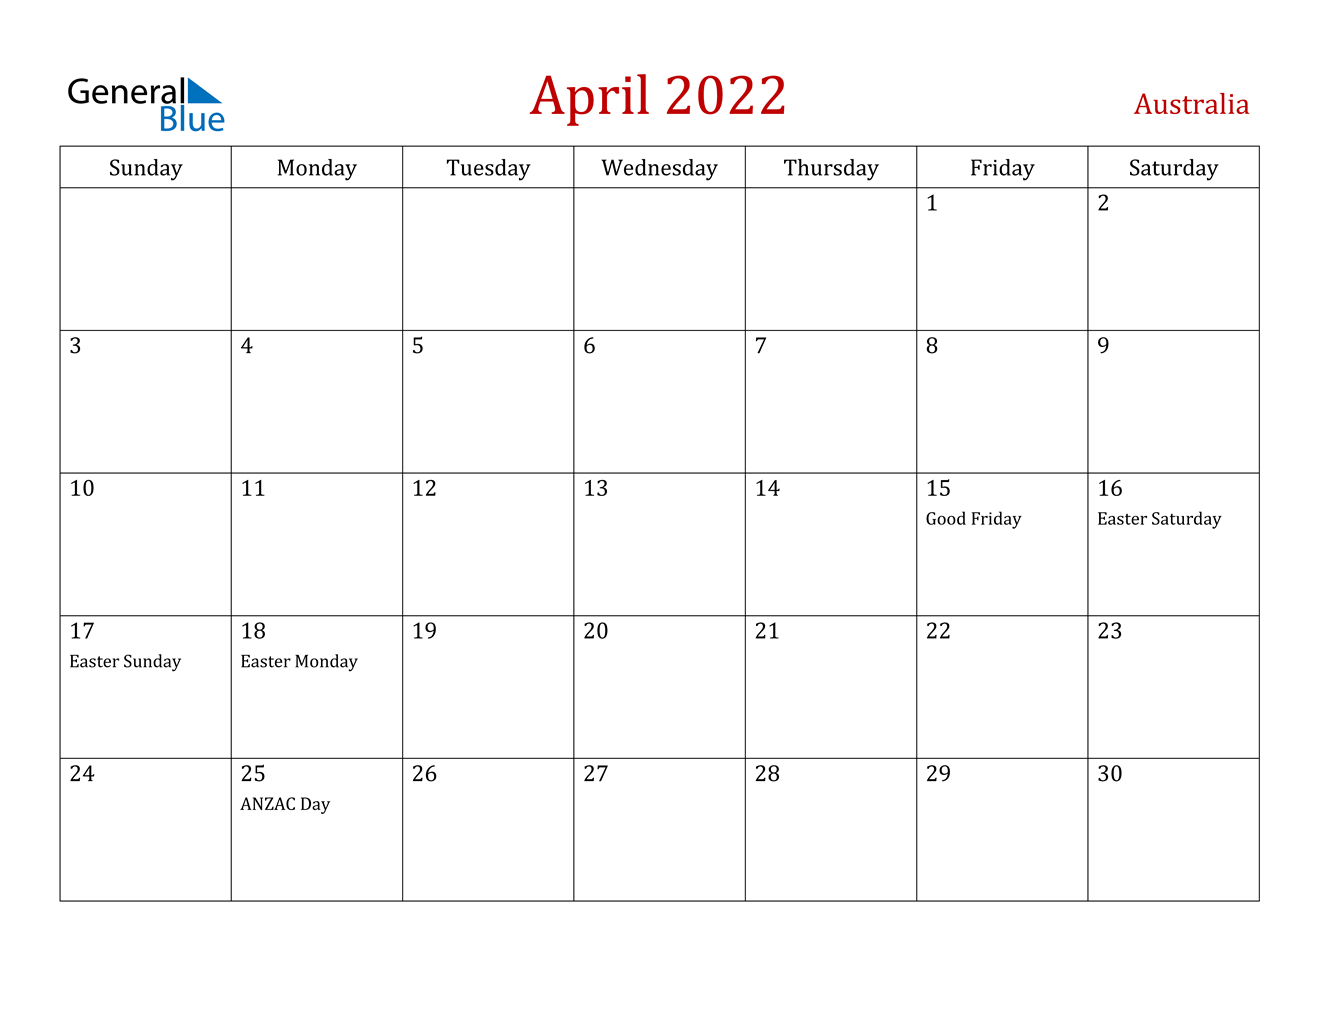 April 2022 Calendar - Australia